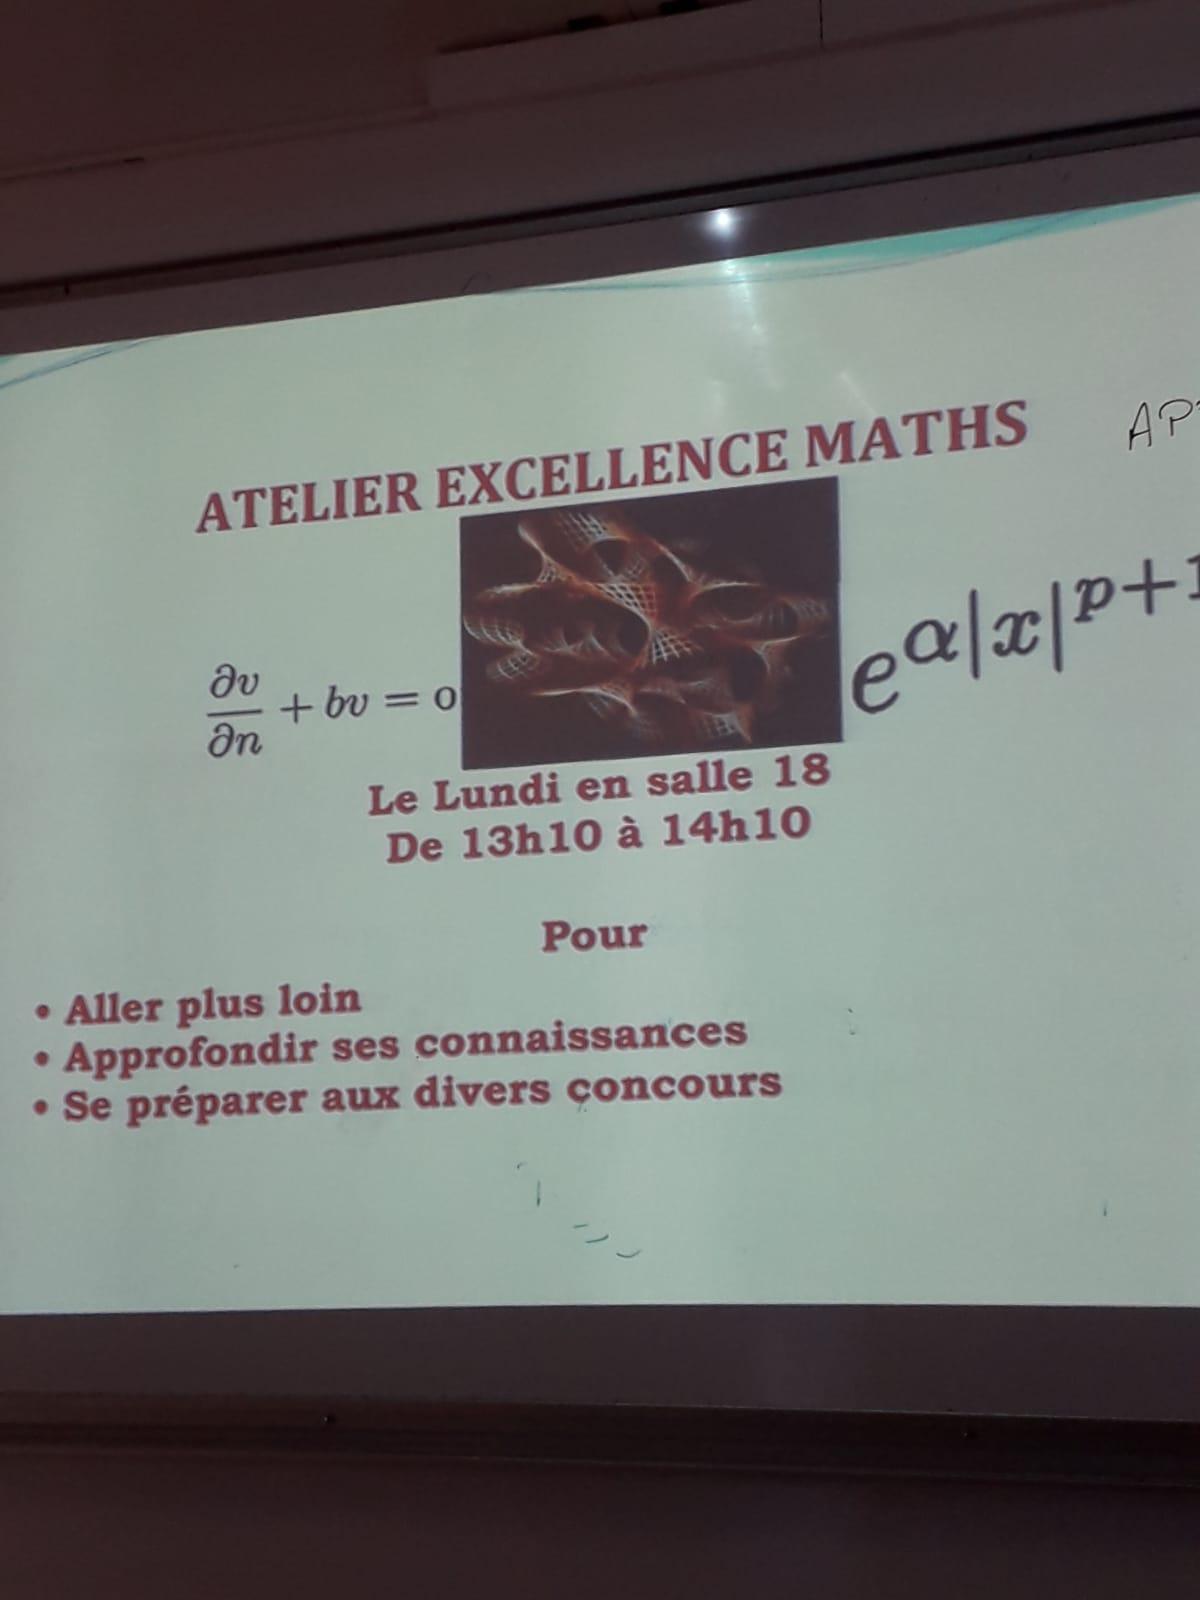 Excellence maths